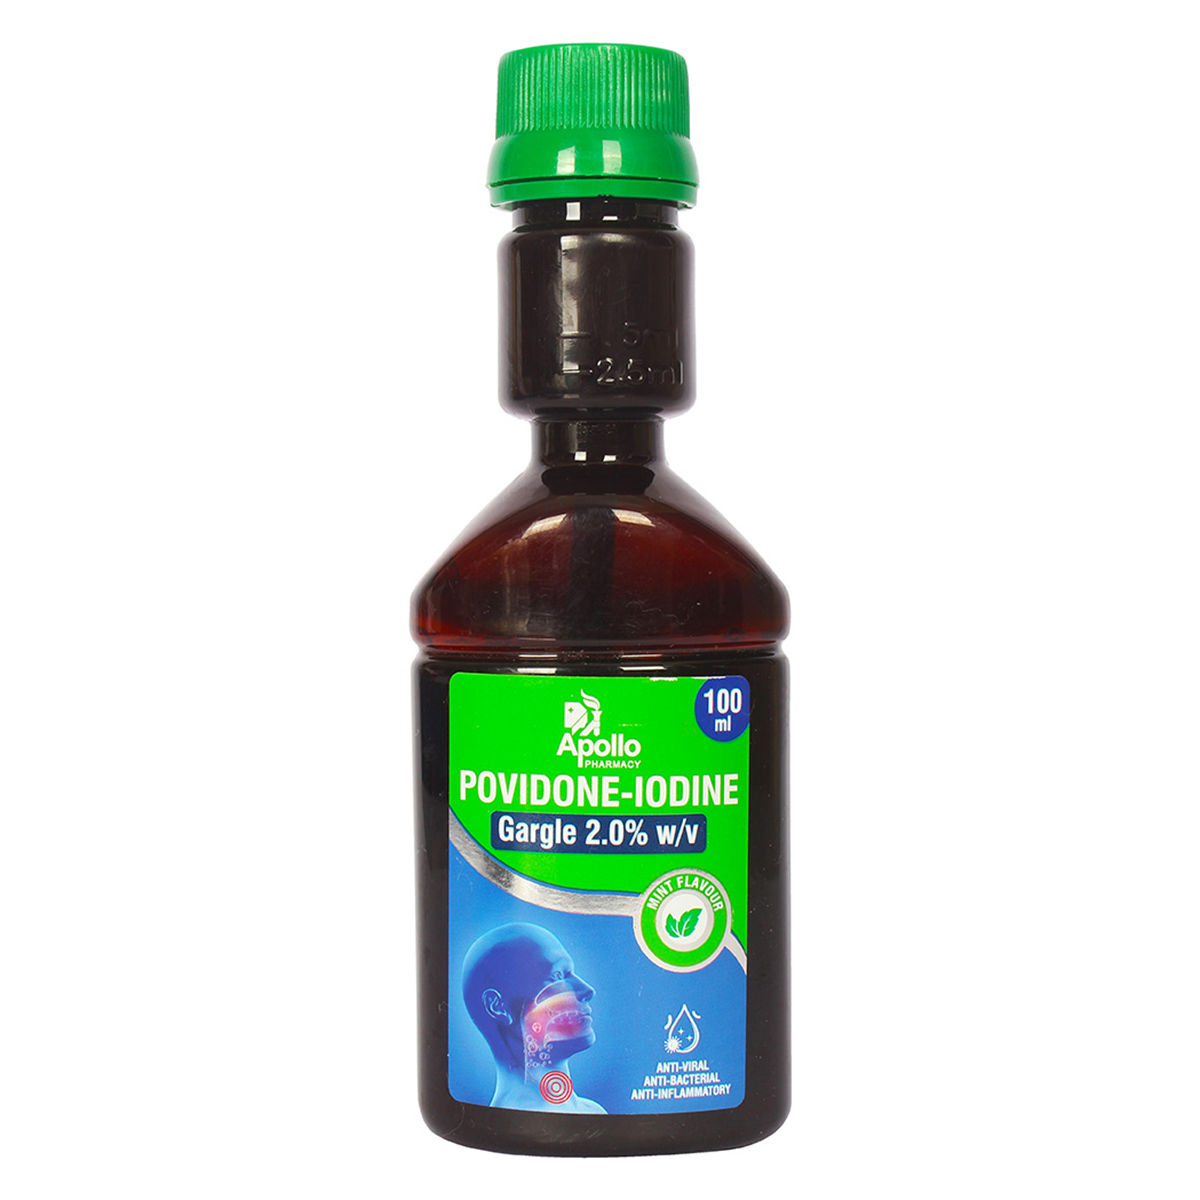 Buy Apollo Pharmacy Povidone Iodine 2% W/V Gargle, 100 ml Online